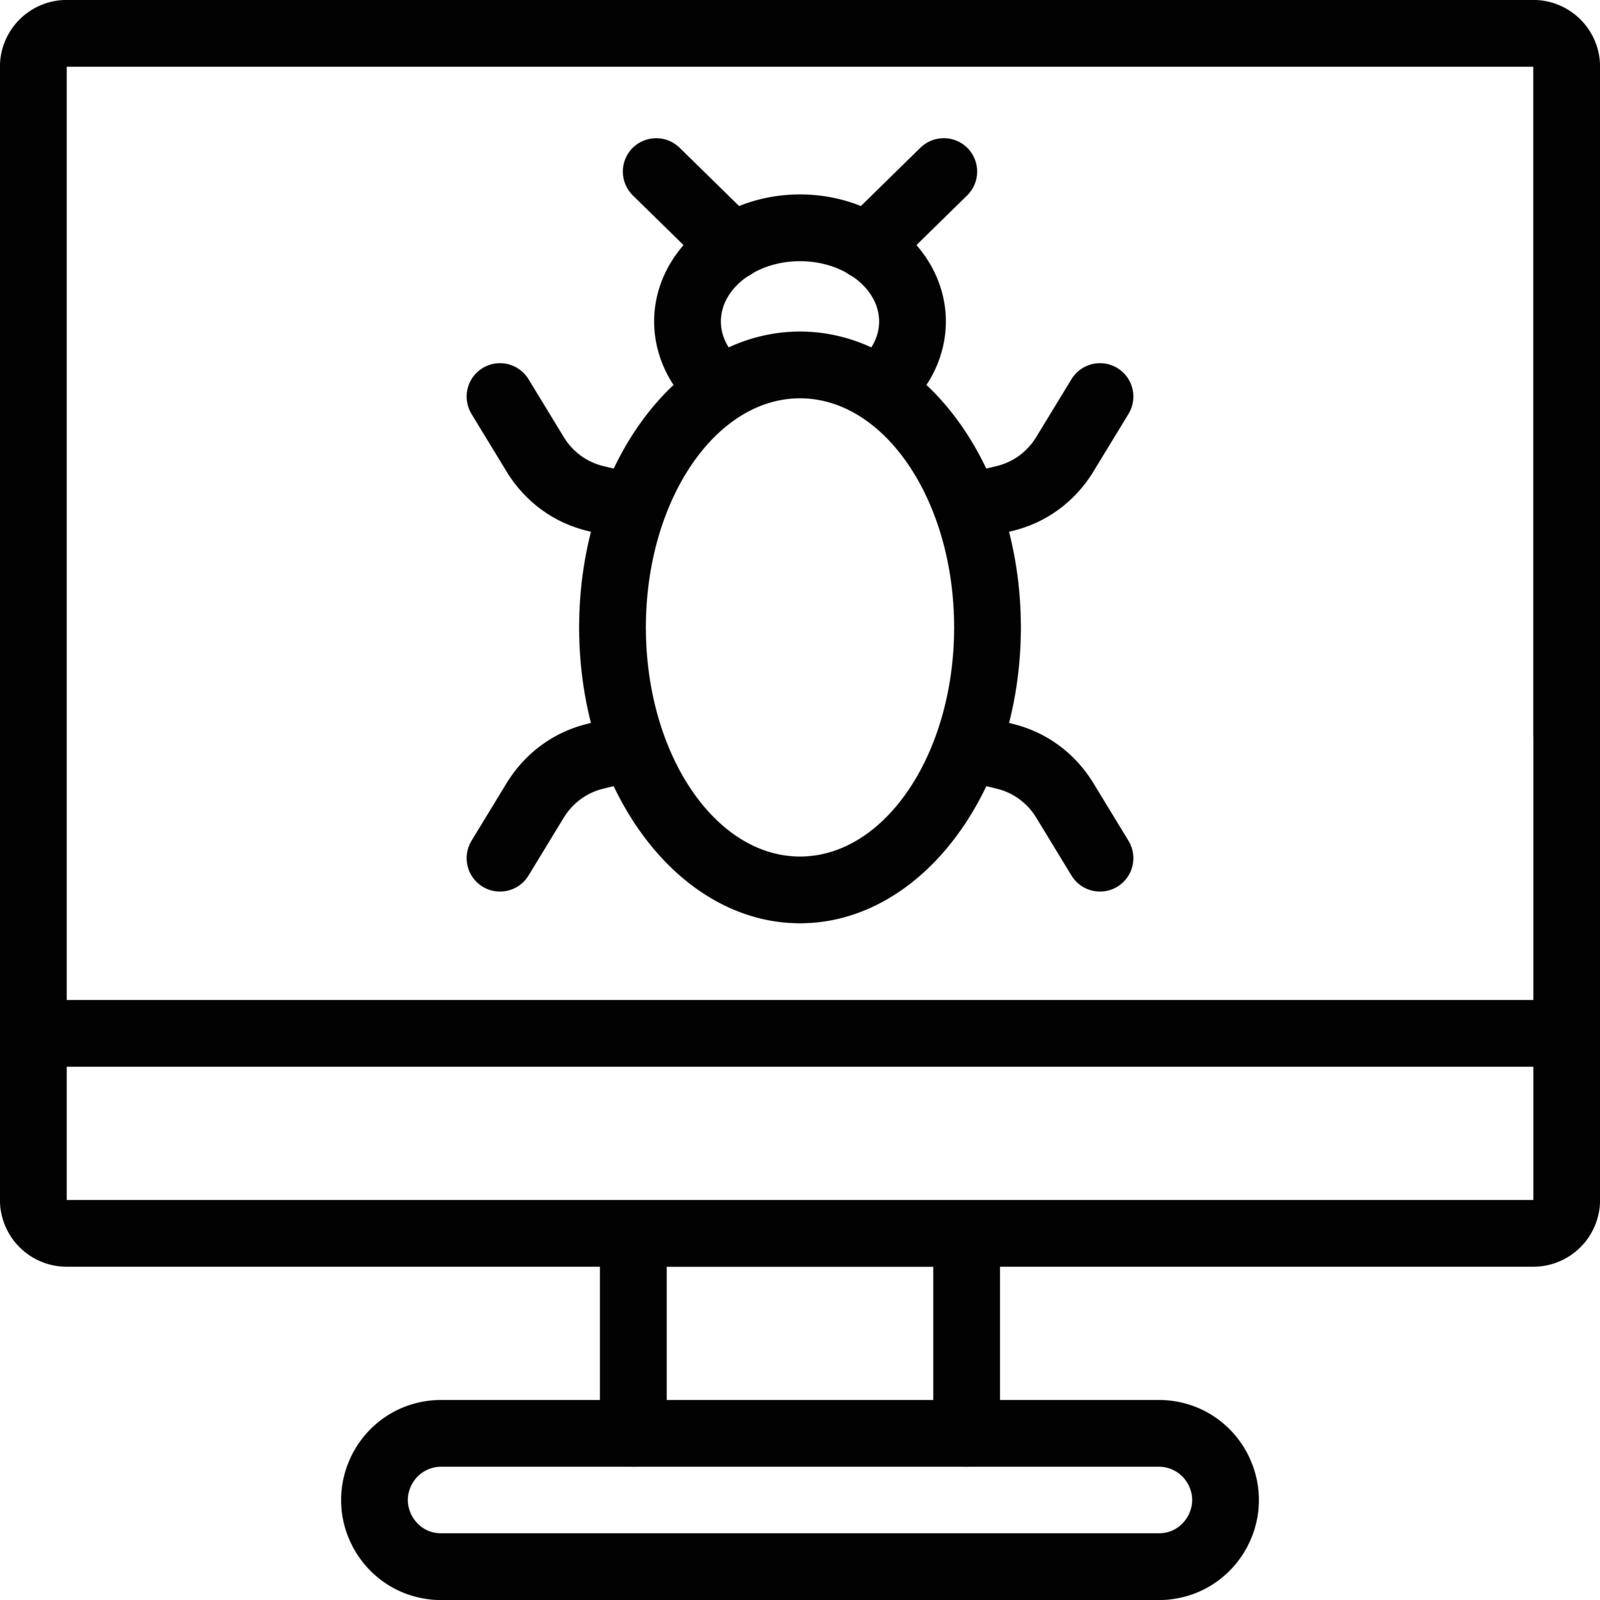 bug by FlaticonsDesign